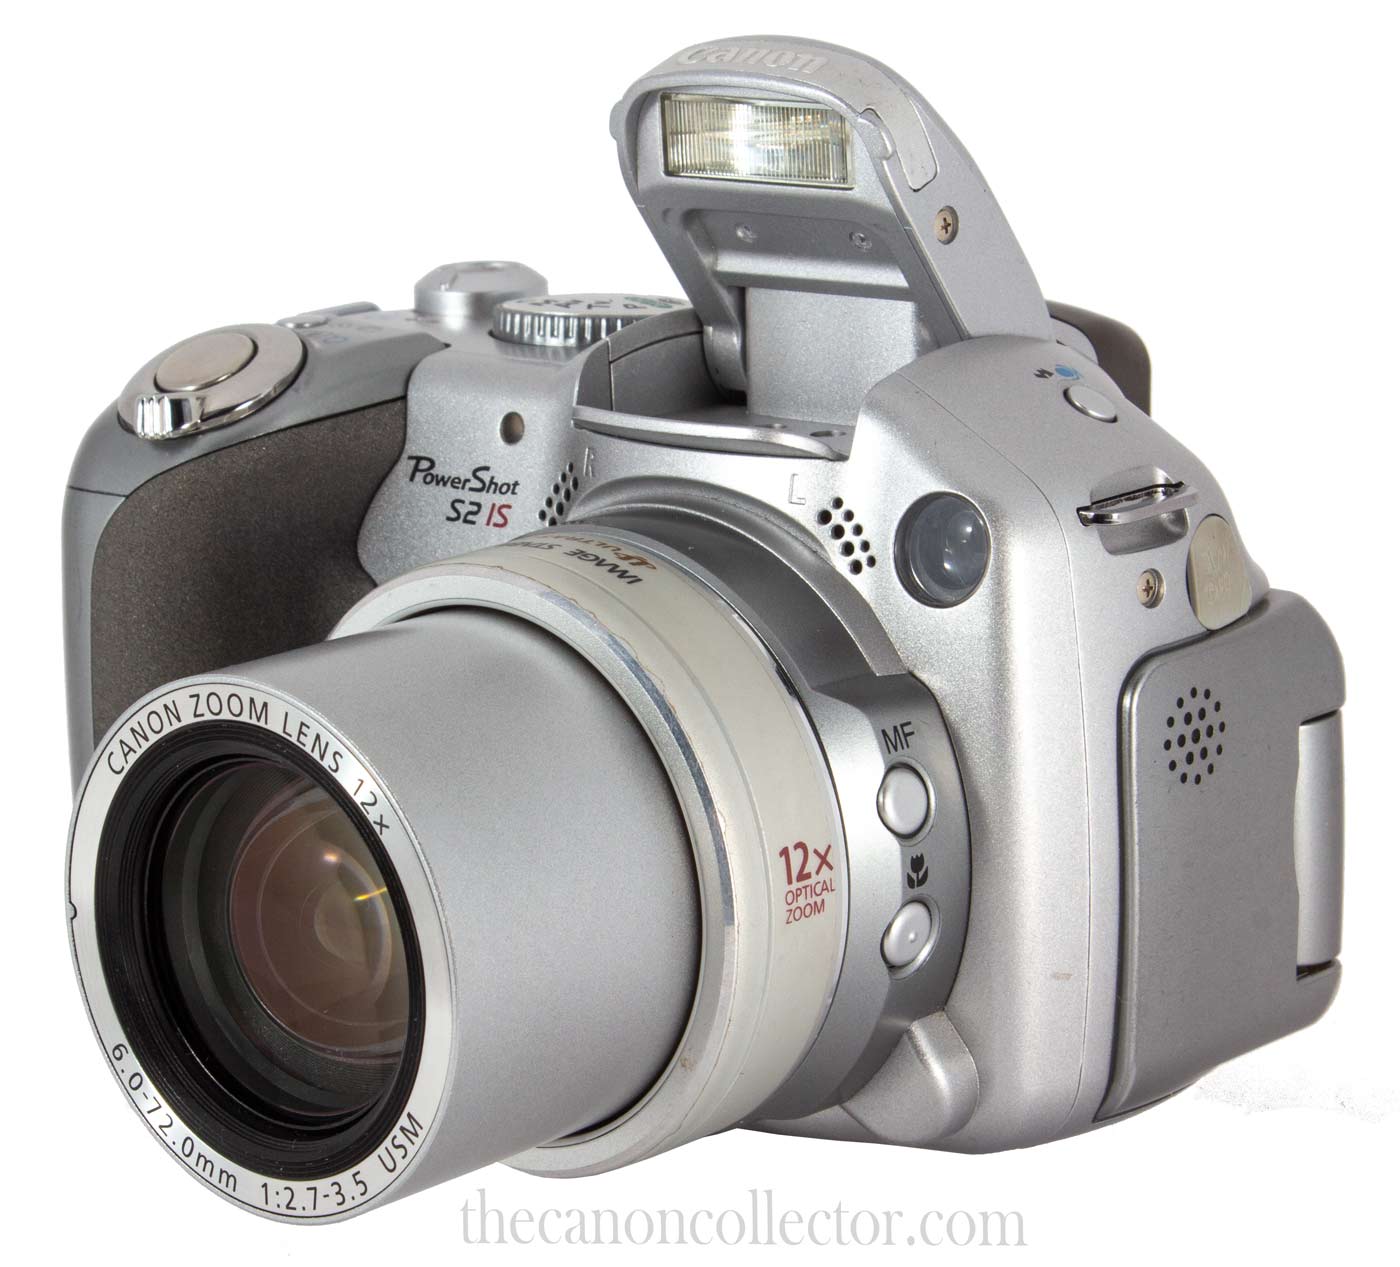 PowerShot S2 IS Camera